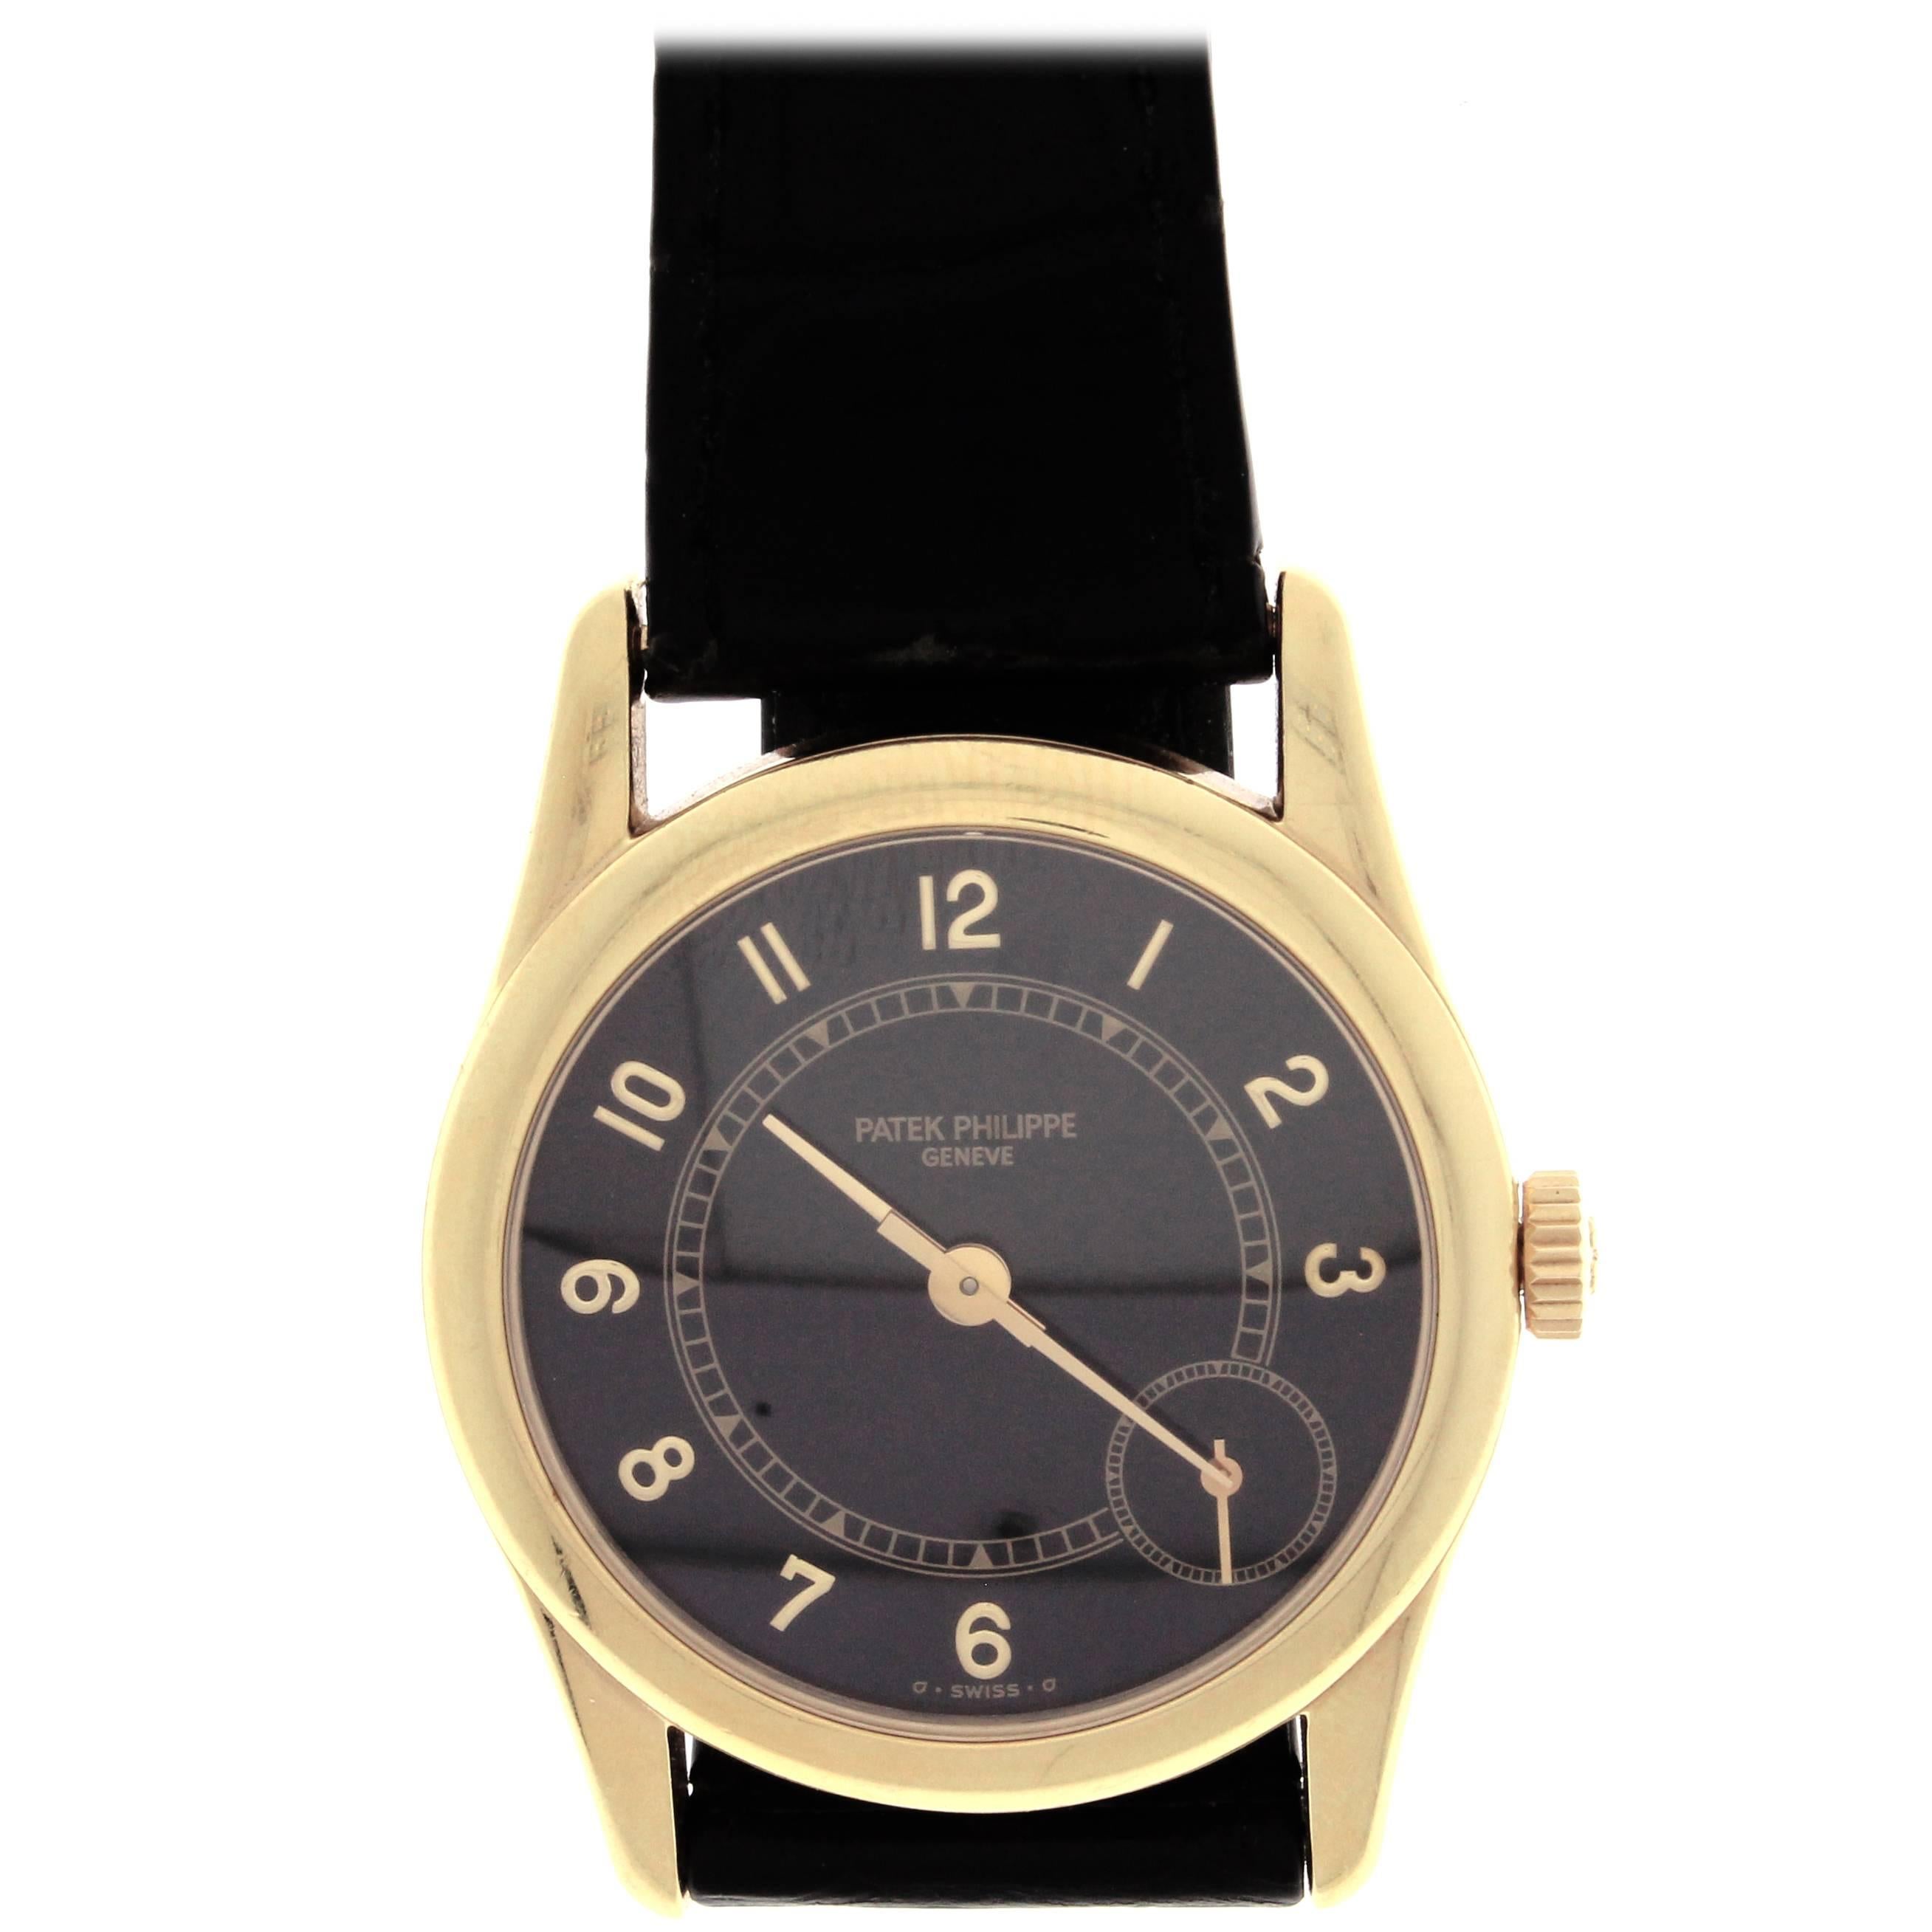 Patek Philippe Calatrava Men's Watch, Model # 5000J